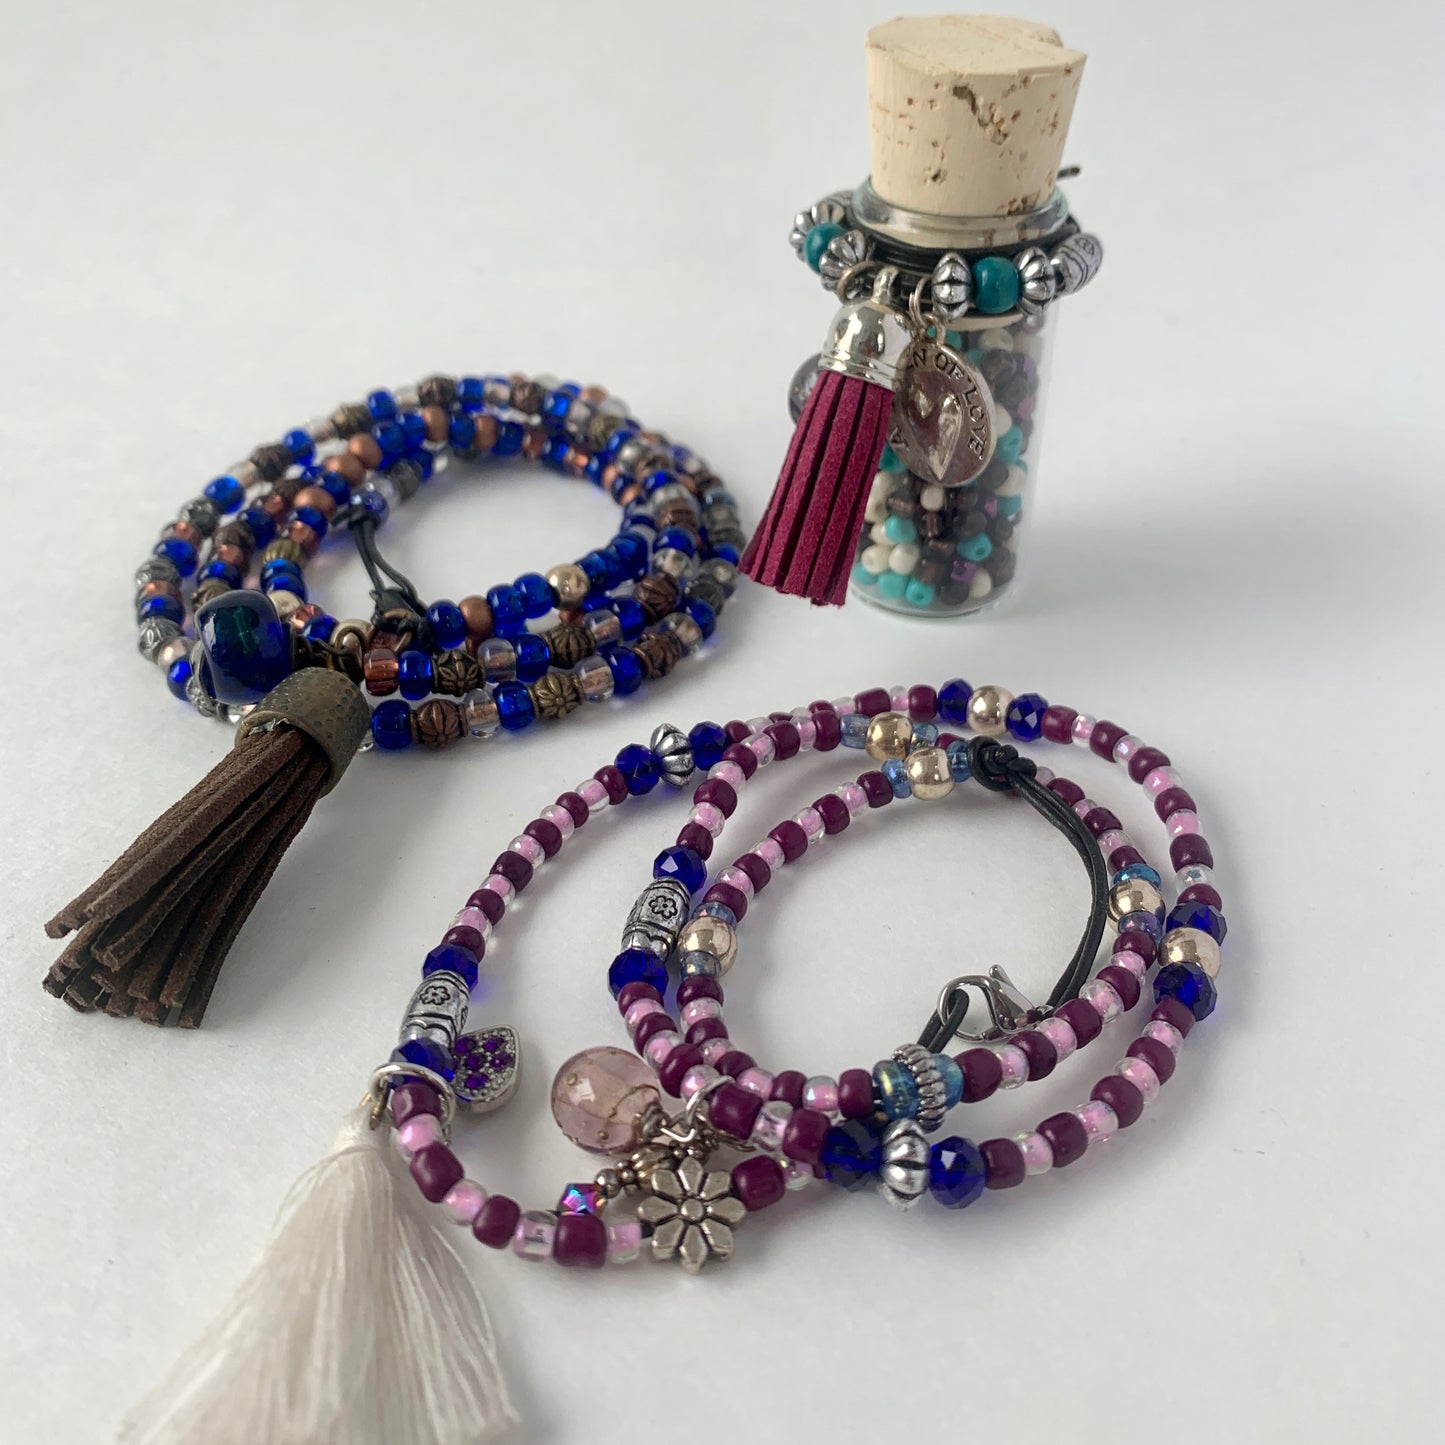 Bead Necklace or Wrap Bracelet Kit